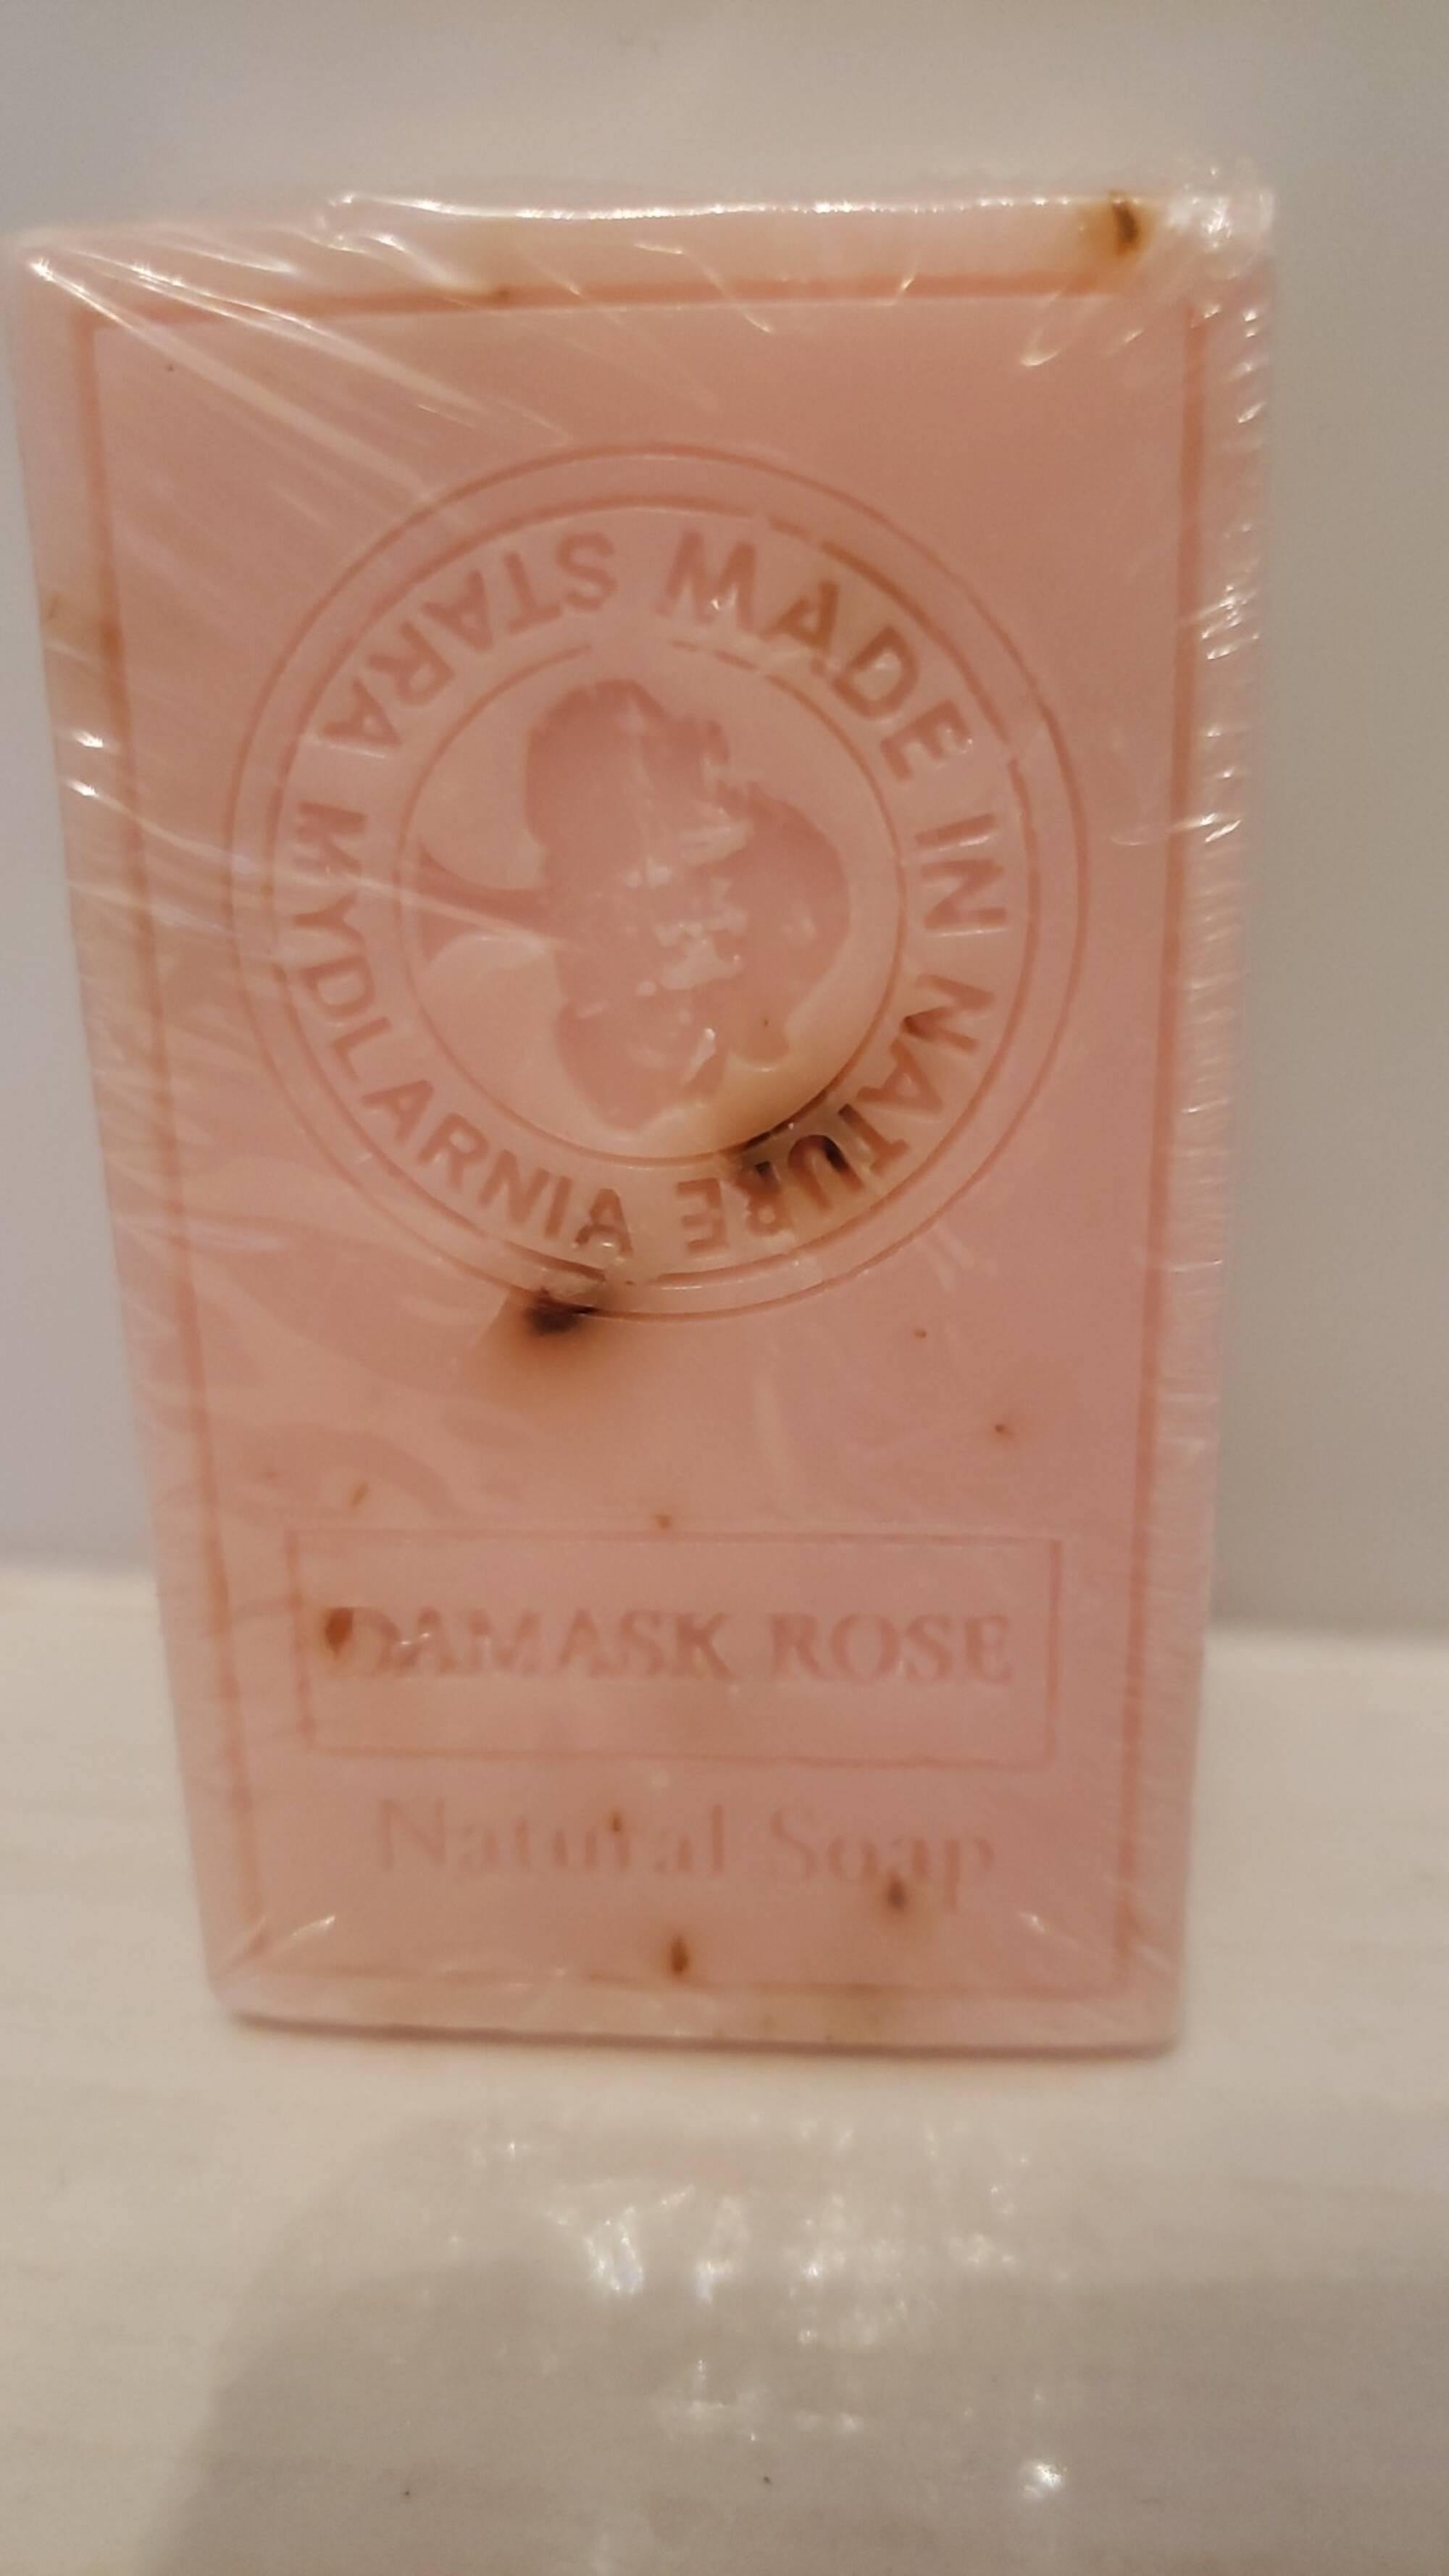 STARA MYDLARNIA - Damask rose - Natural soap